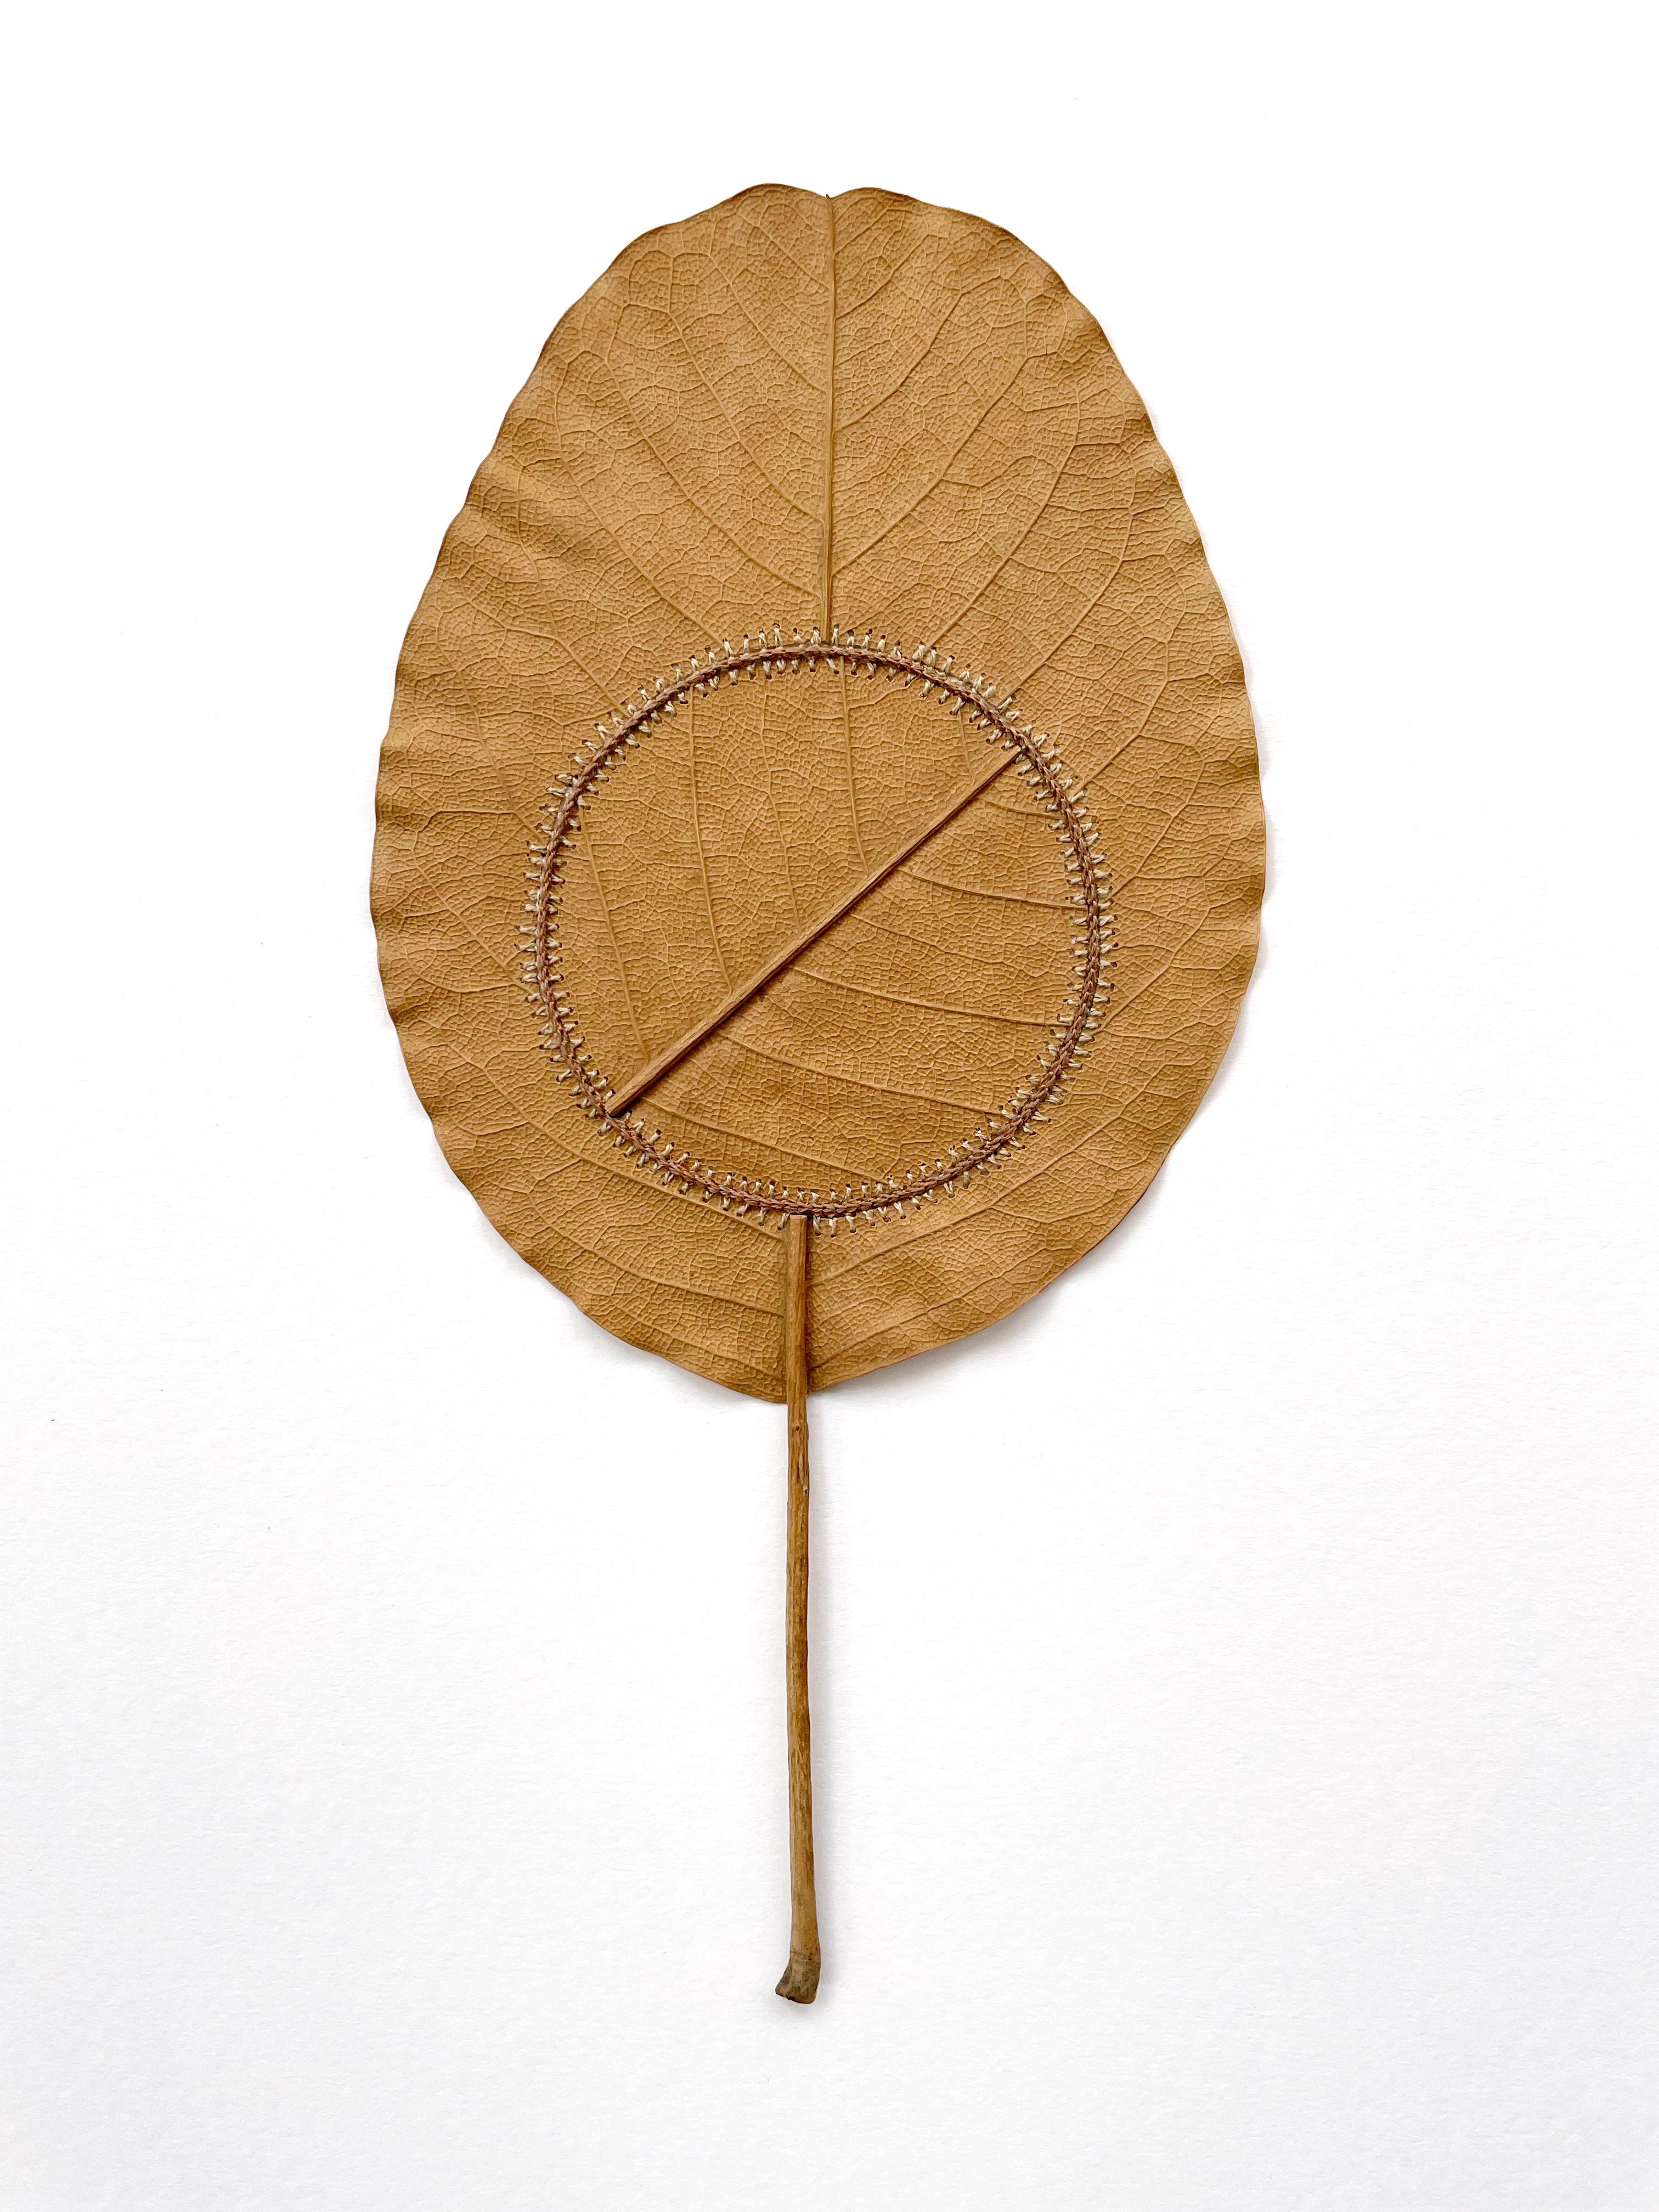 Navigation XVI - contemporary crochet dried magnolia leaf nature art framed - Mixed Media Art by Susanna Bauer